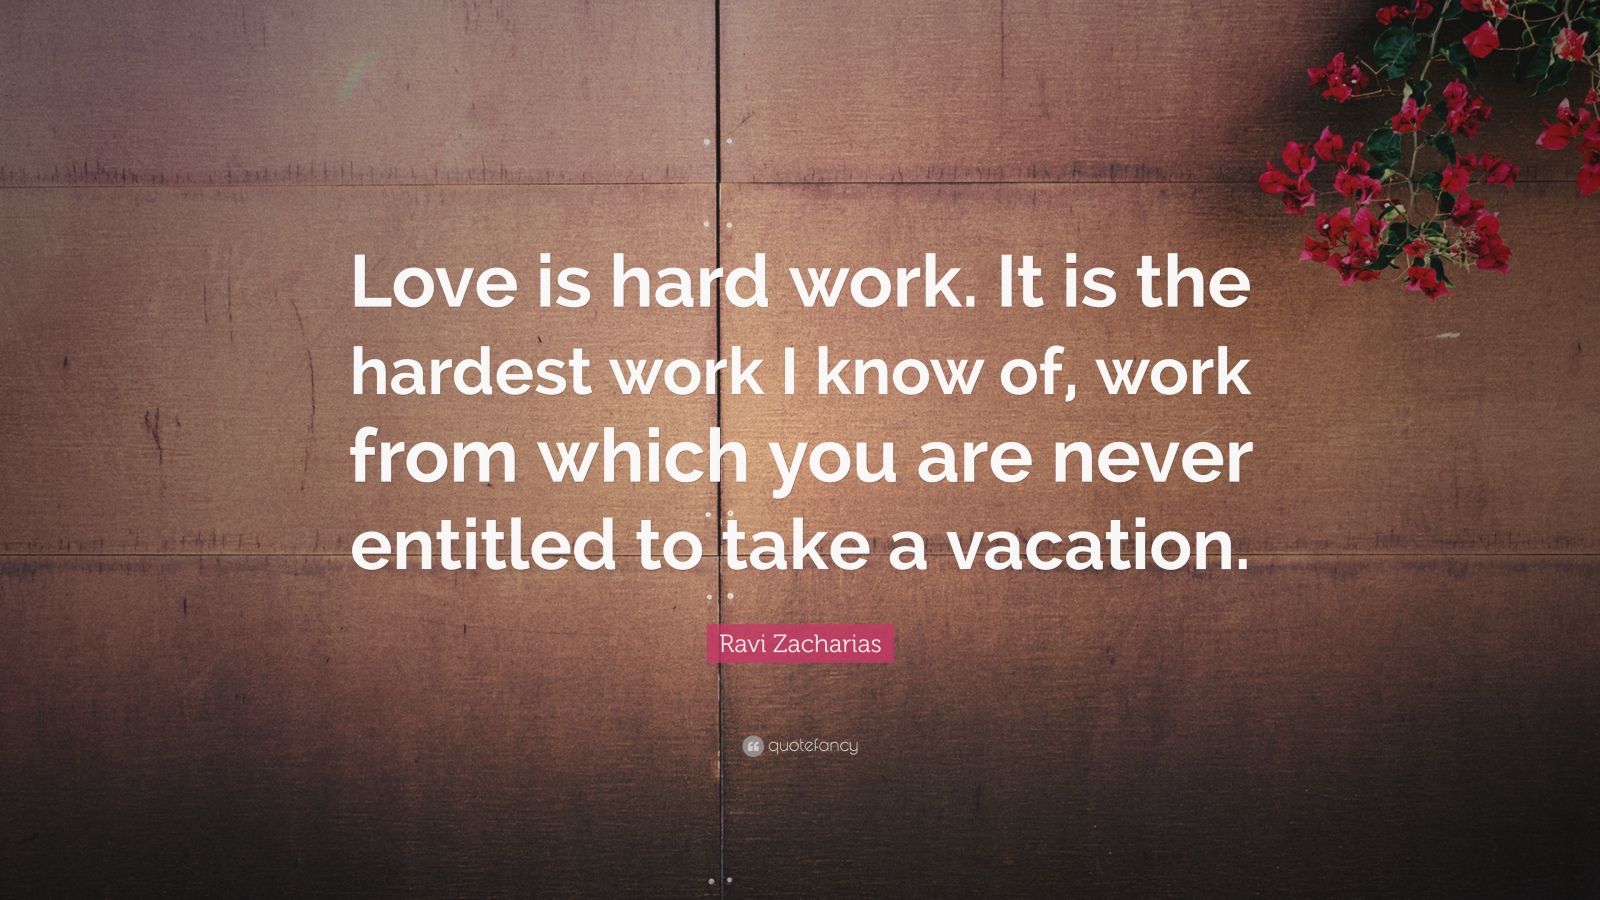 Ravi Zacharias Quote: “Love is hard work. It is the hardest work I know ...